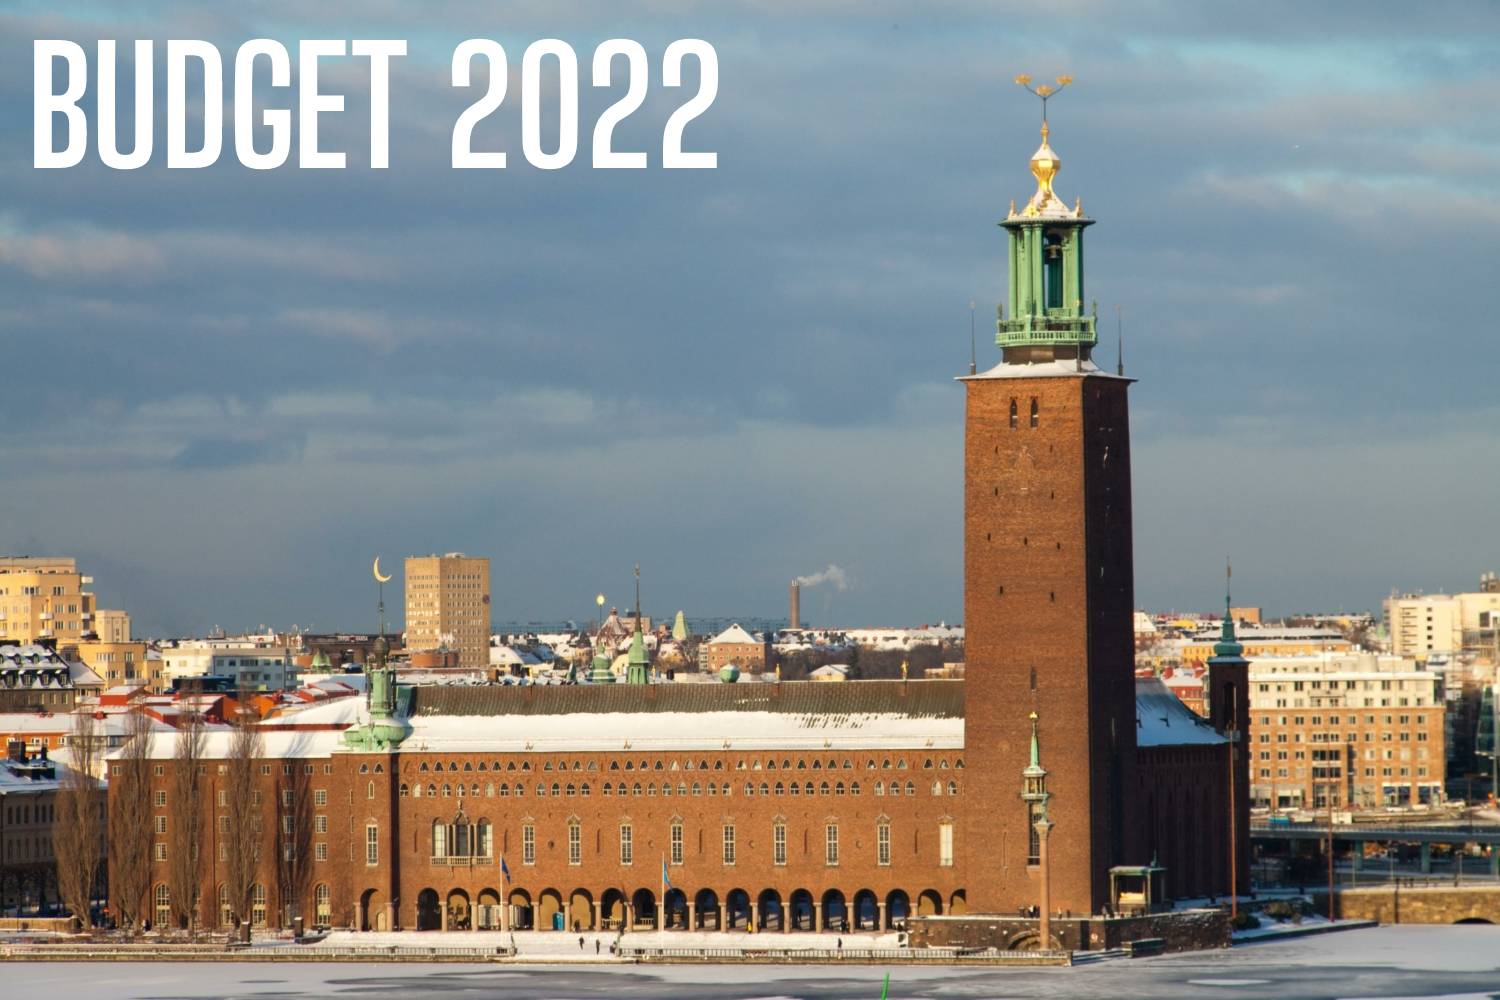 stockholms stadshus med texten budget 2022